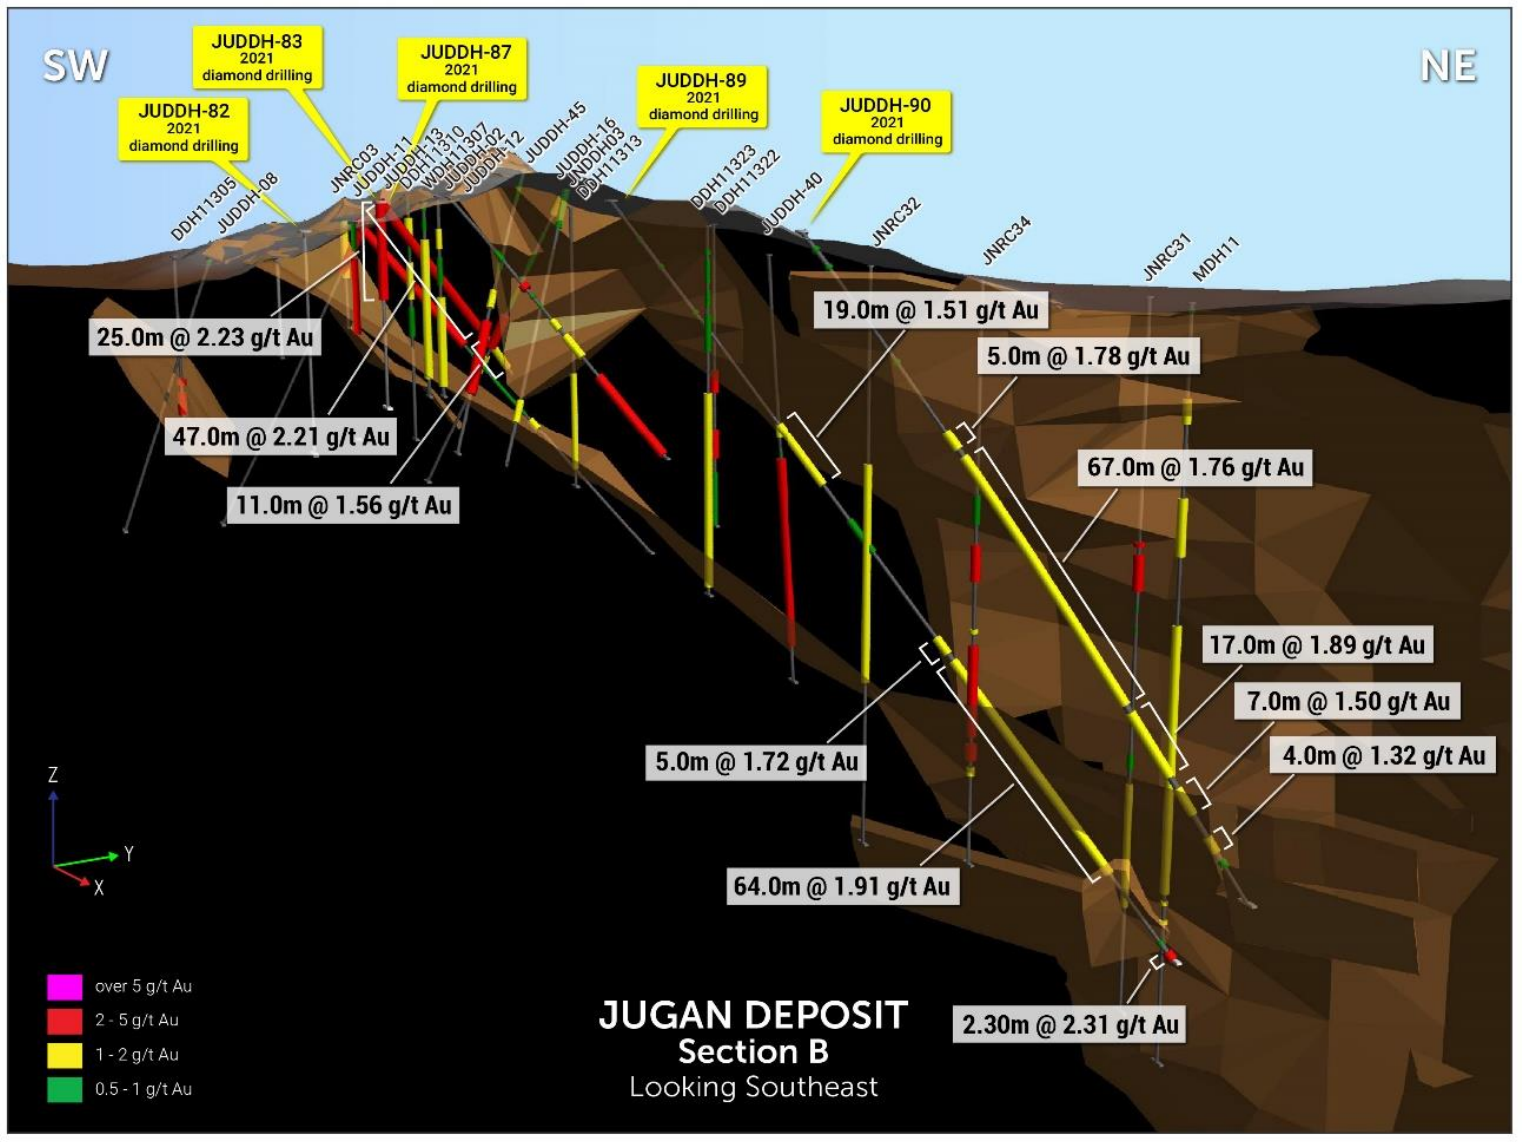 (Source: Besra Gold) An exploration diagram detailing activities at Jugan 